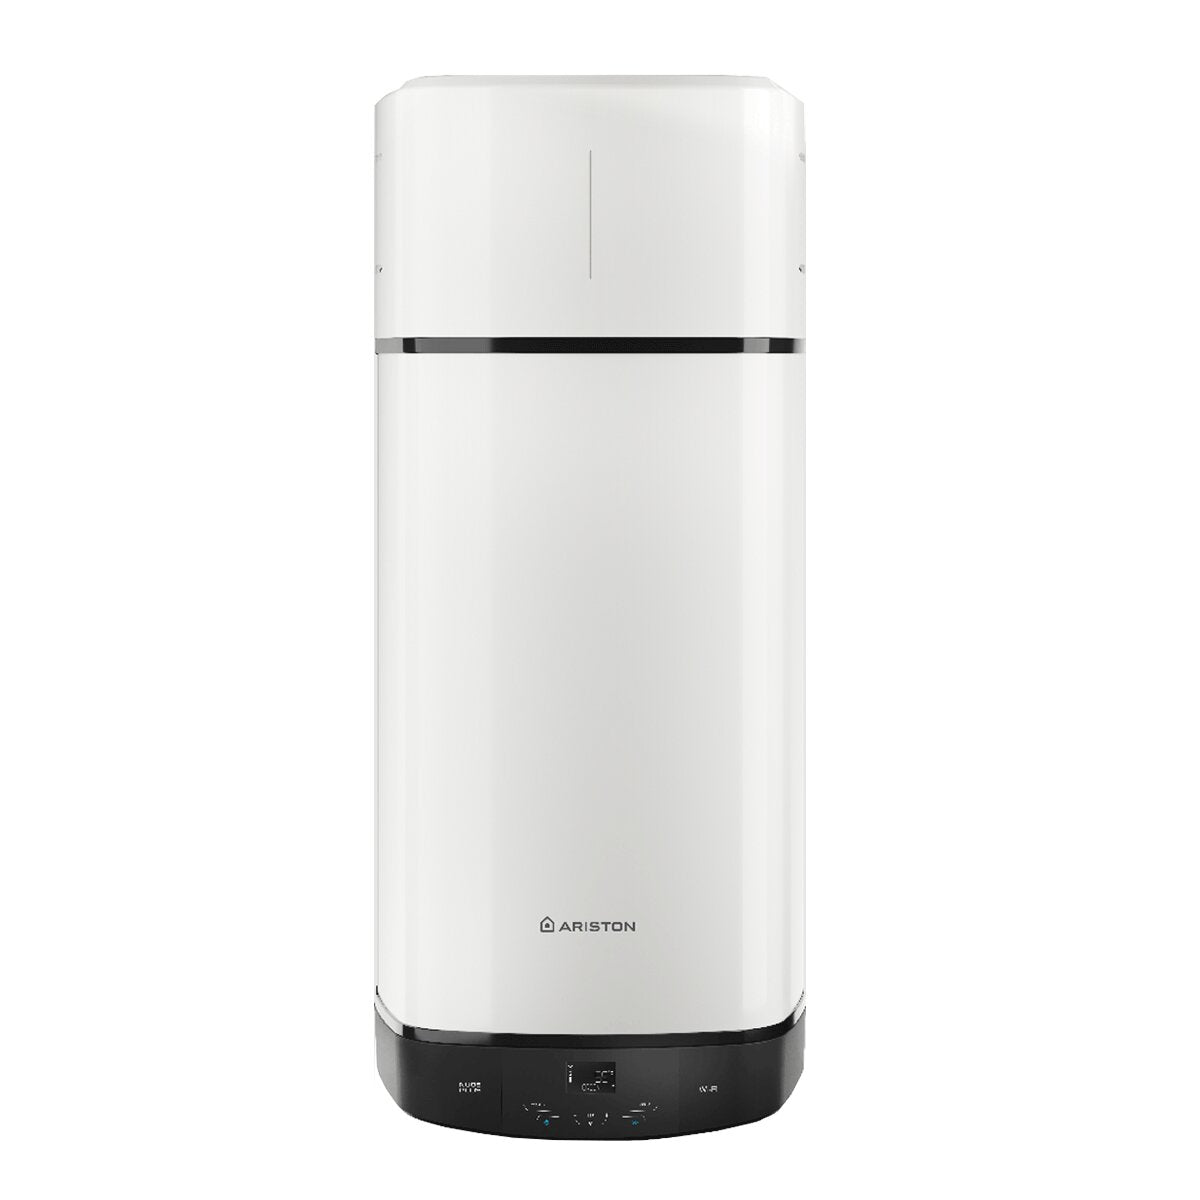 Ariston Nuos Plus R290 S2 WiFi A+ 80 Liter heat pump water heater